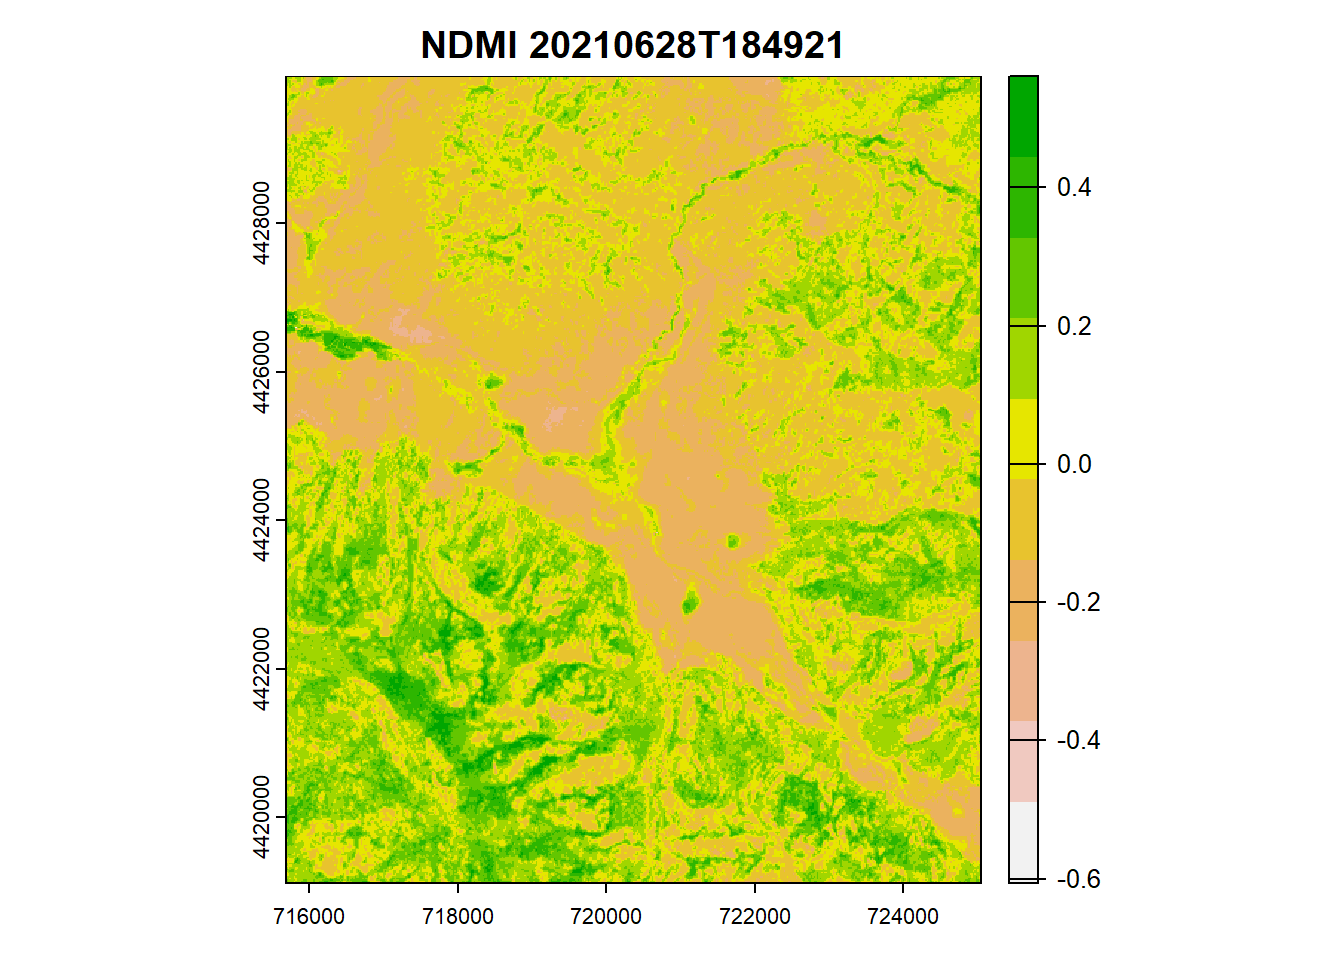 NDMI from Sentinel-2 image, 20210628